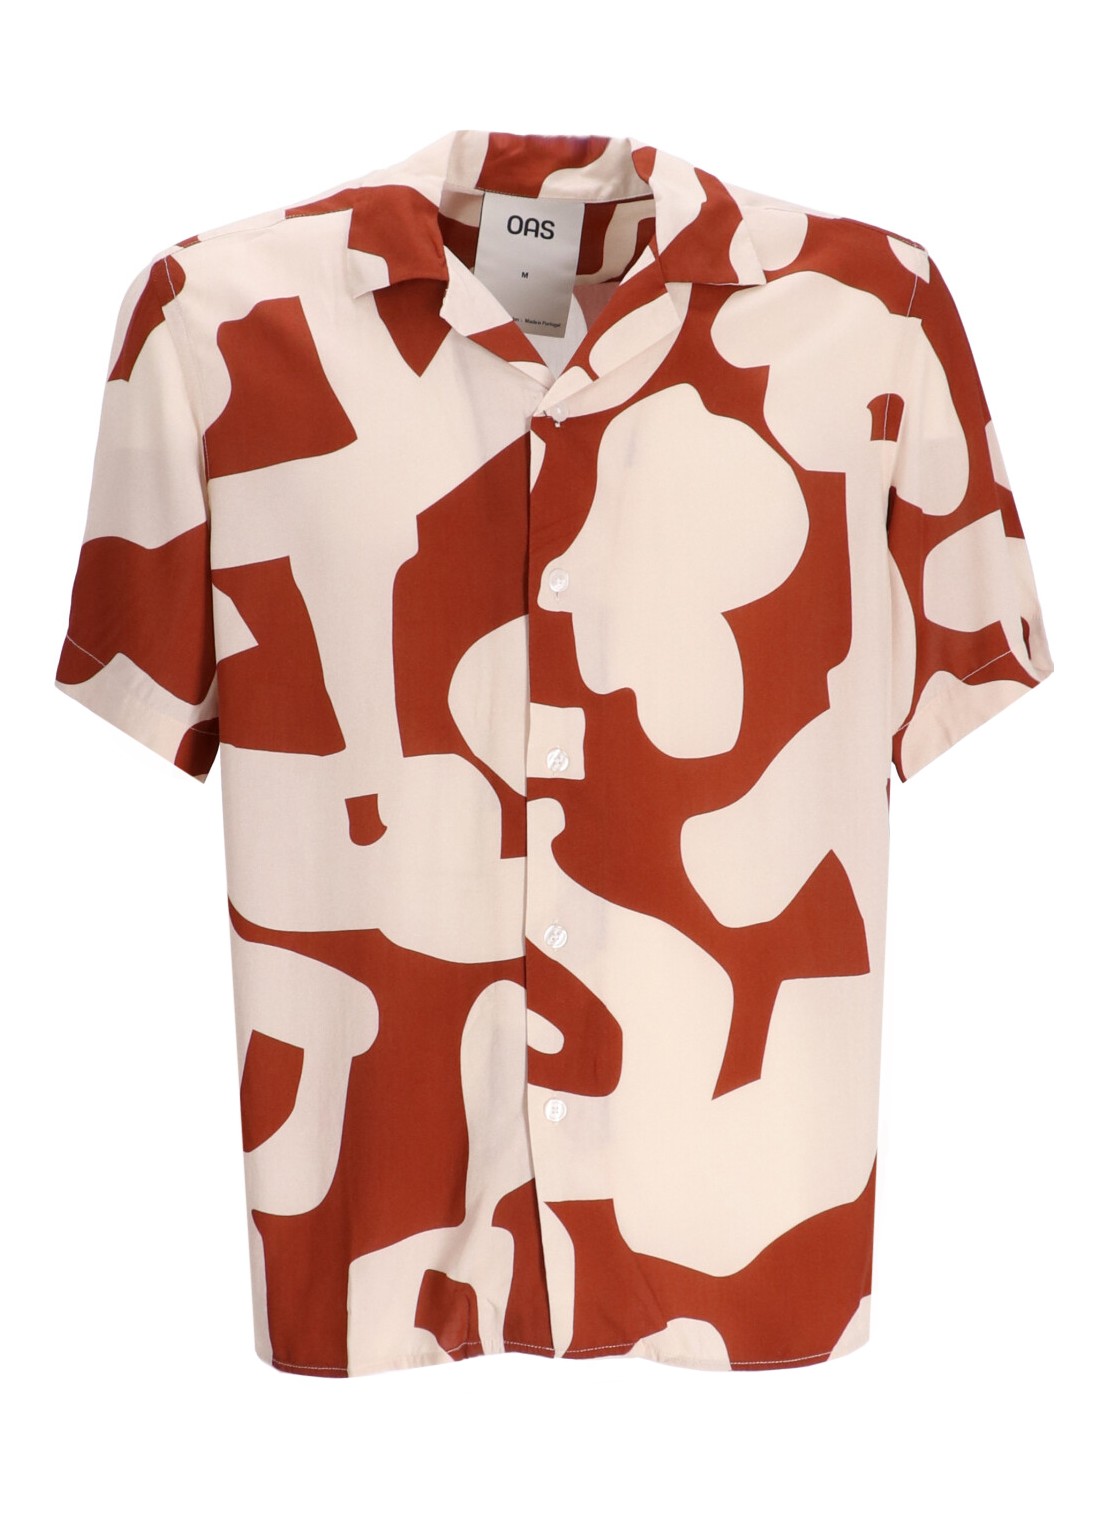 Camiseria oas shirt manrusset puzzlotec viscose shirt - 700546 russet puzzlotec talla XL
 